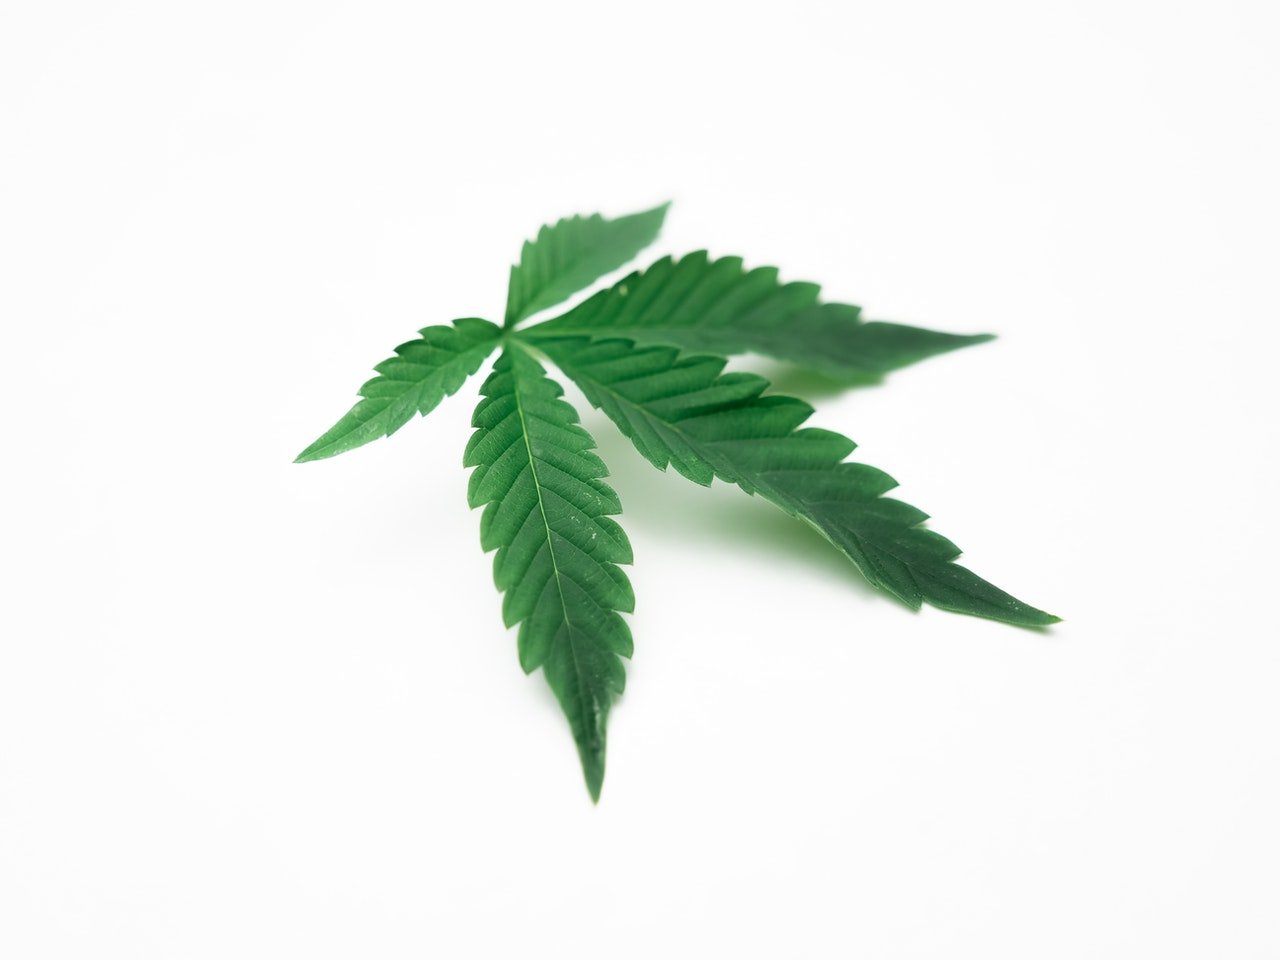 New Medical Cannabis Facility to Open in Westbury in Tasmania